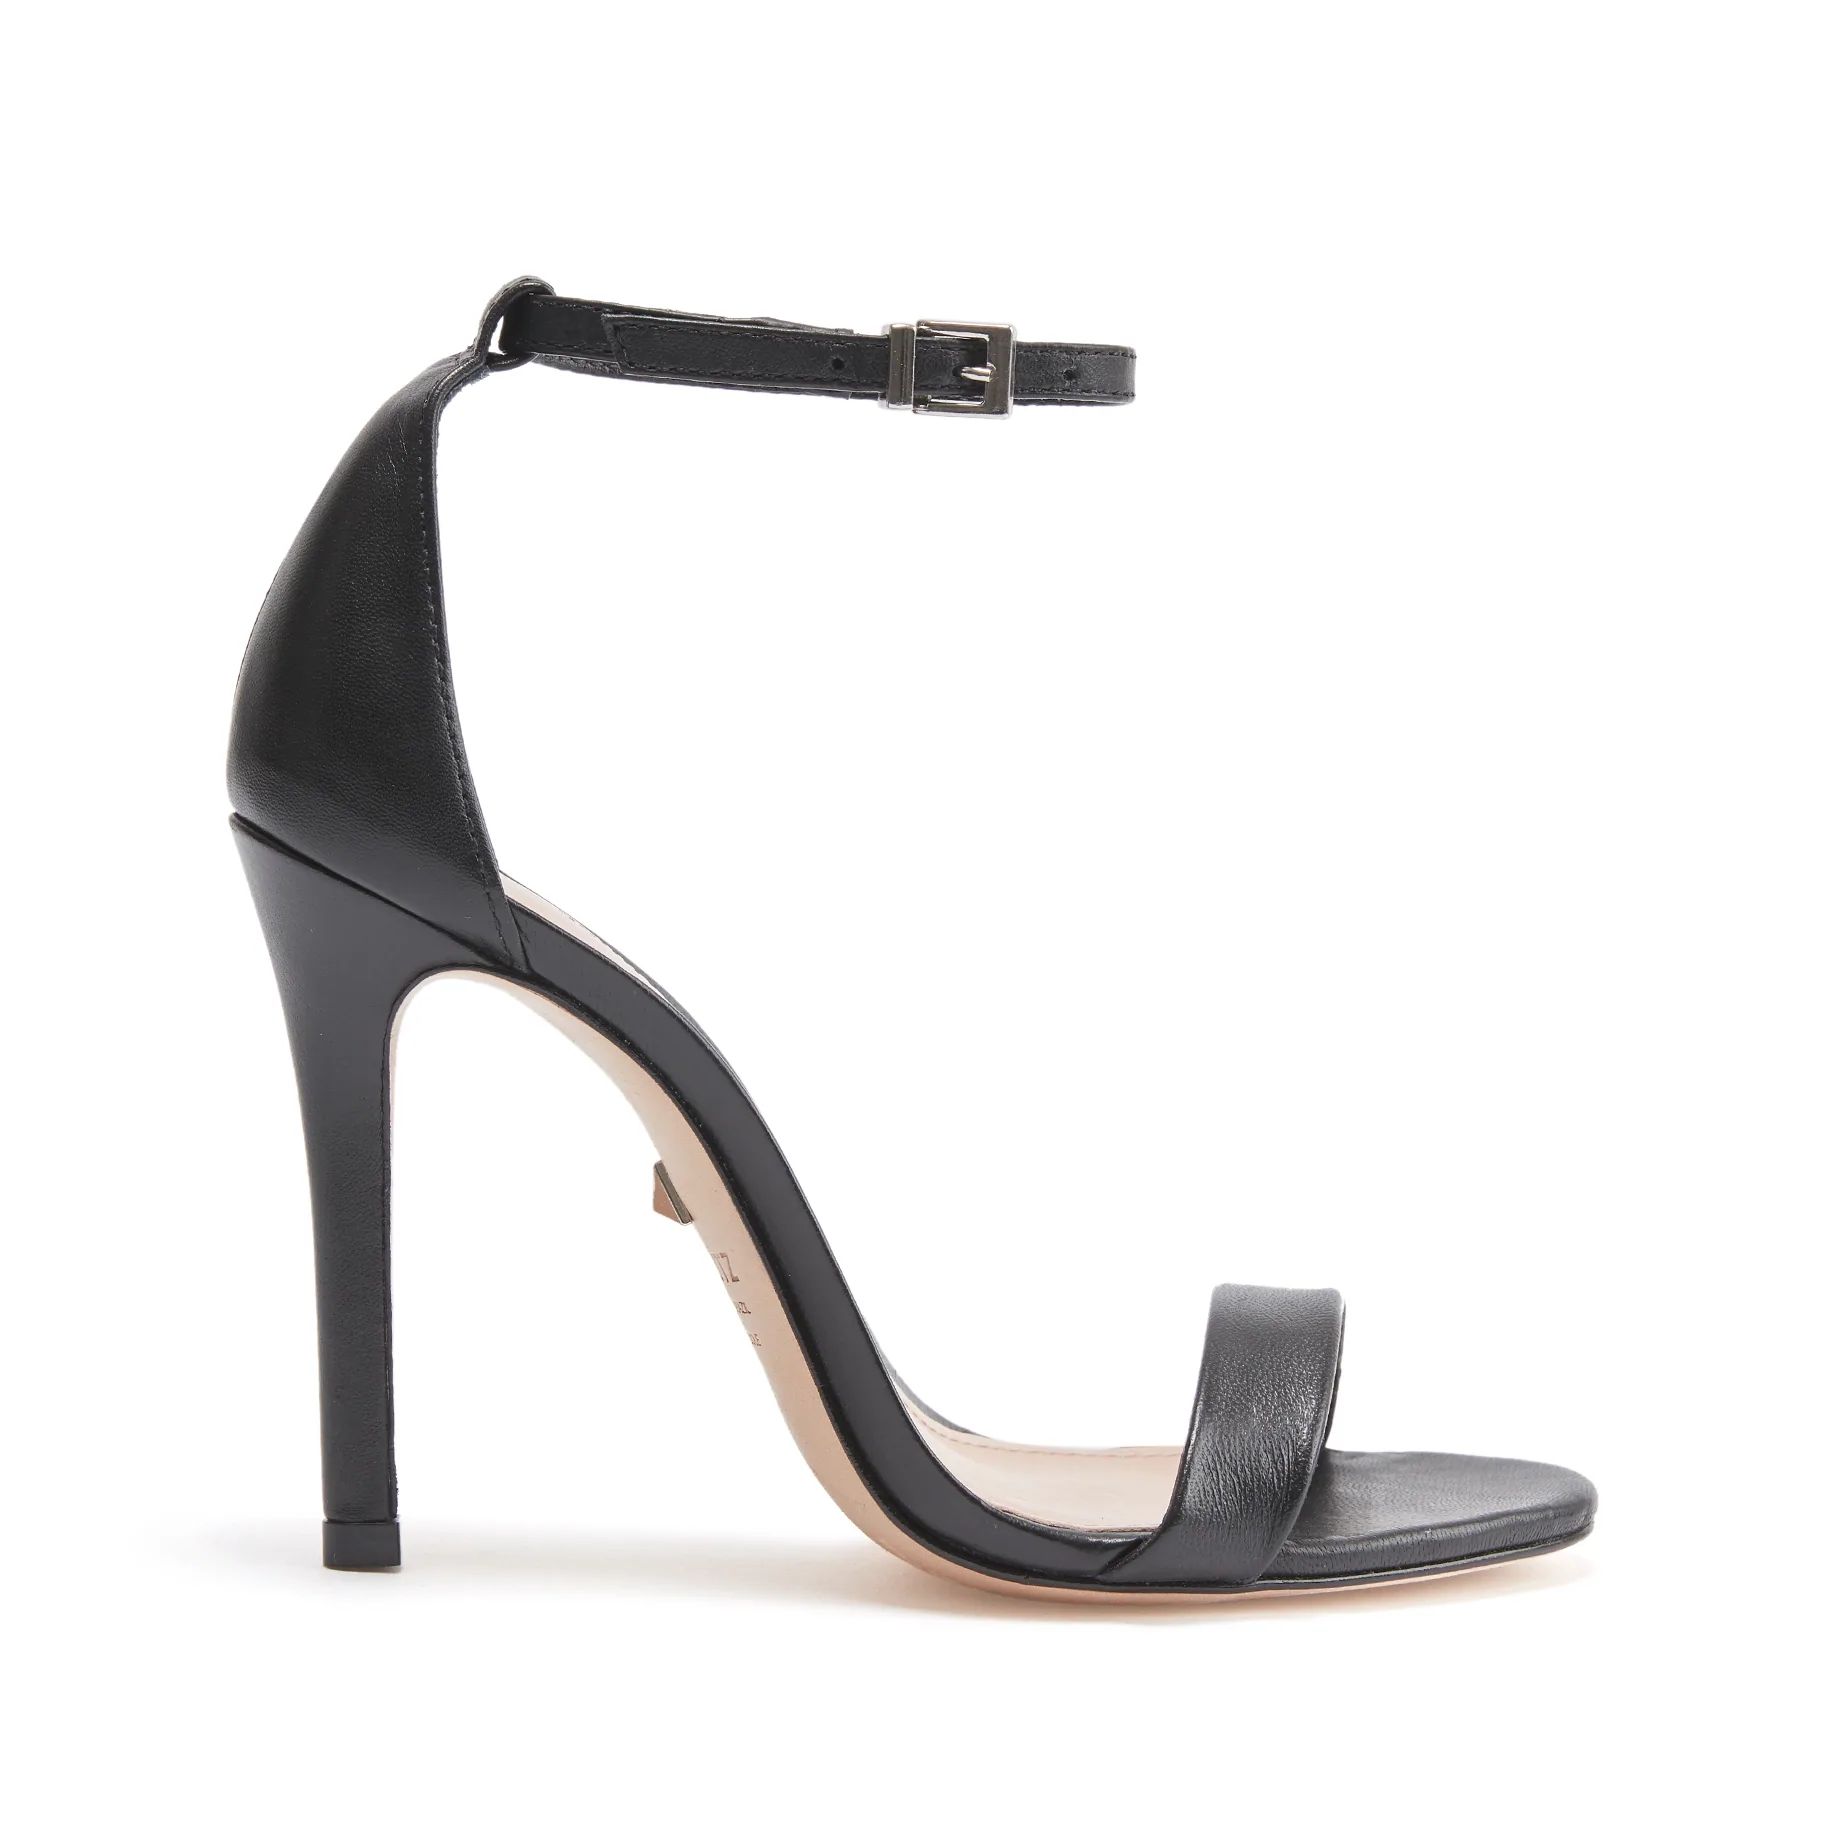 Cadey-Lee High Heel Sandal with Single Toe Strap | Schutz Shoes | Schutz Shoes (US)